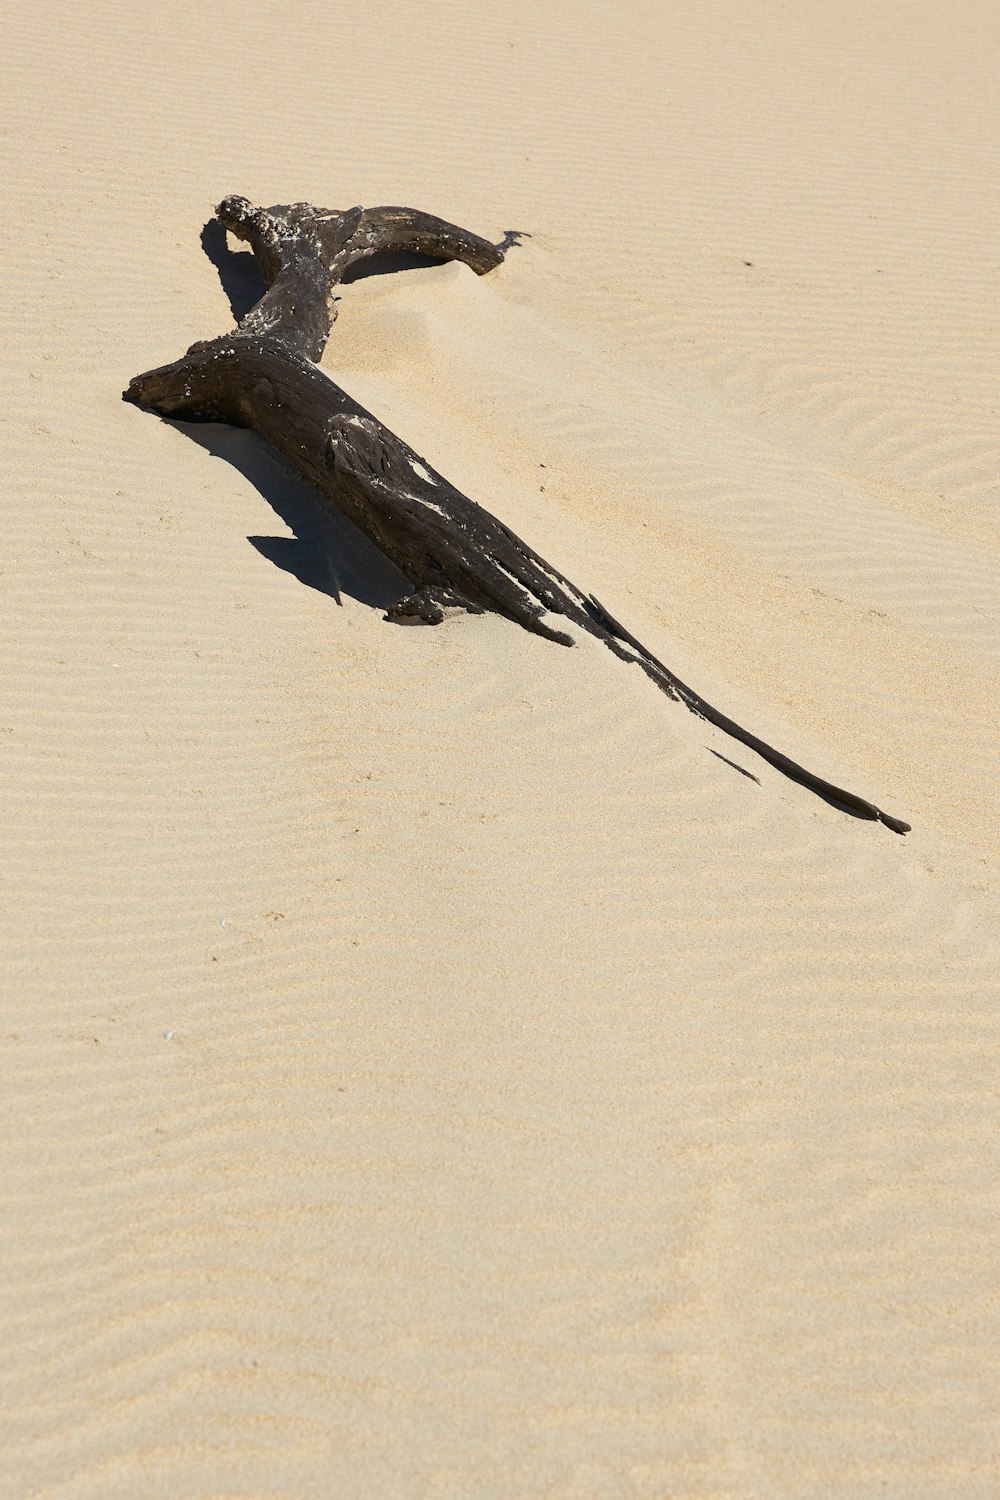 black bird on white sand during daytime